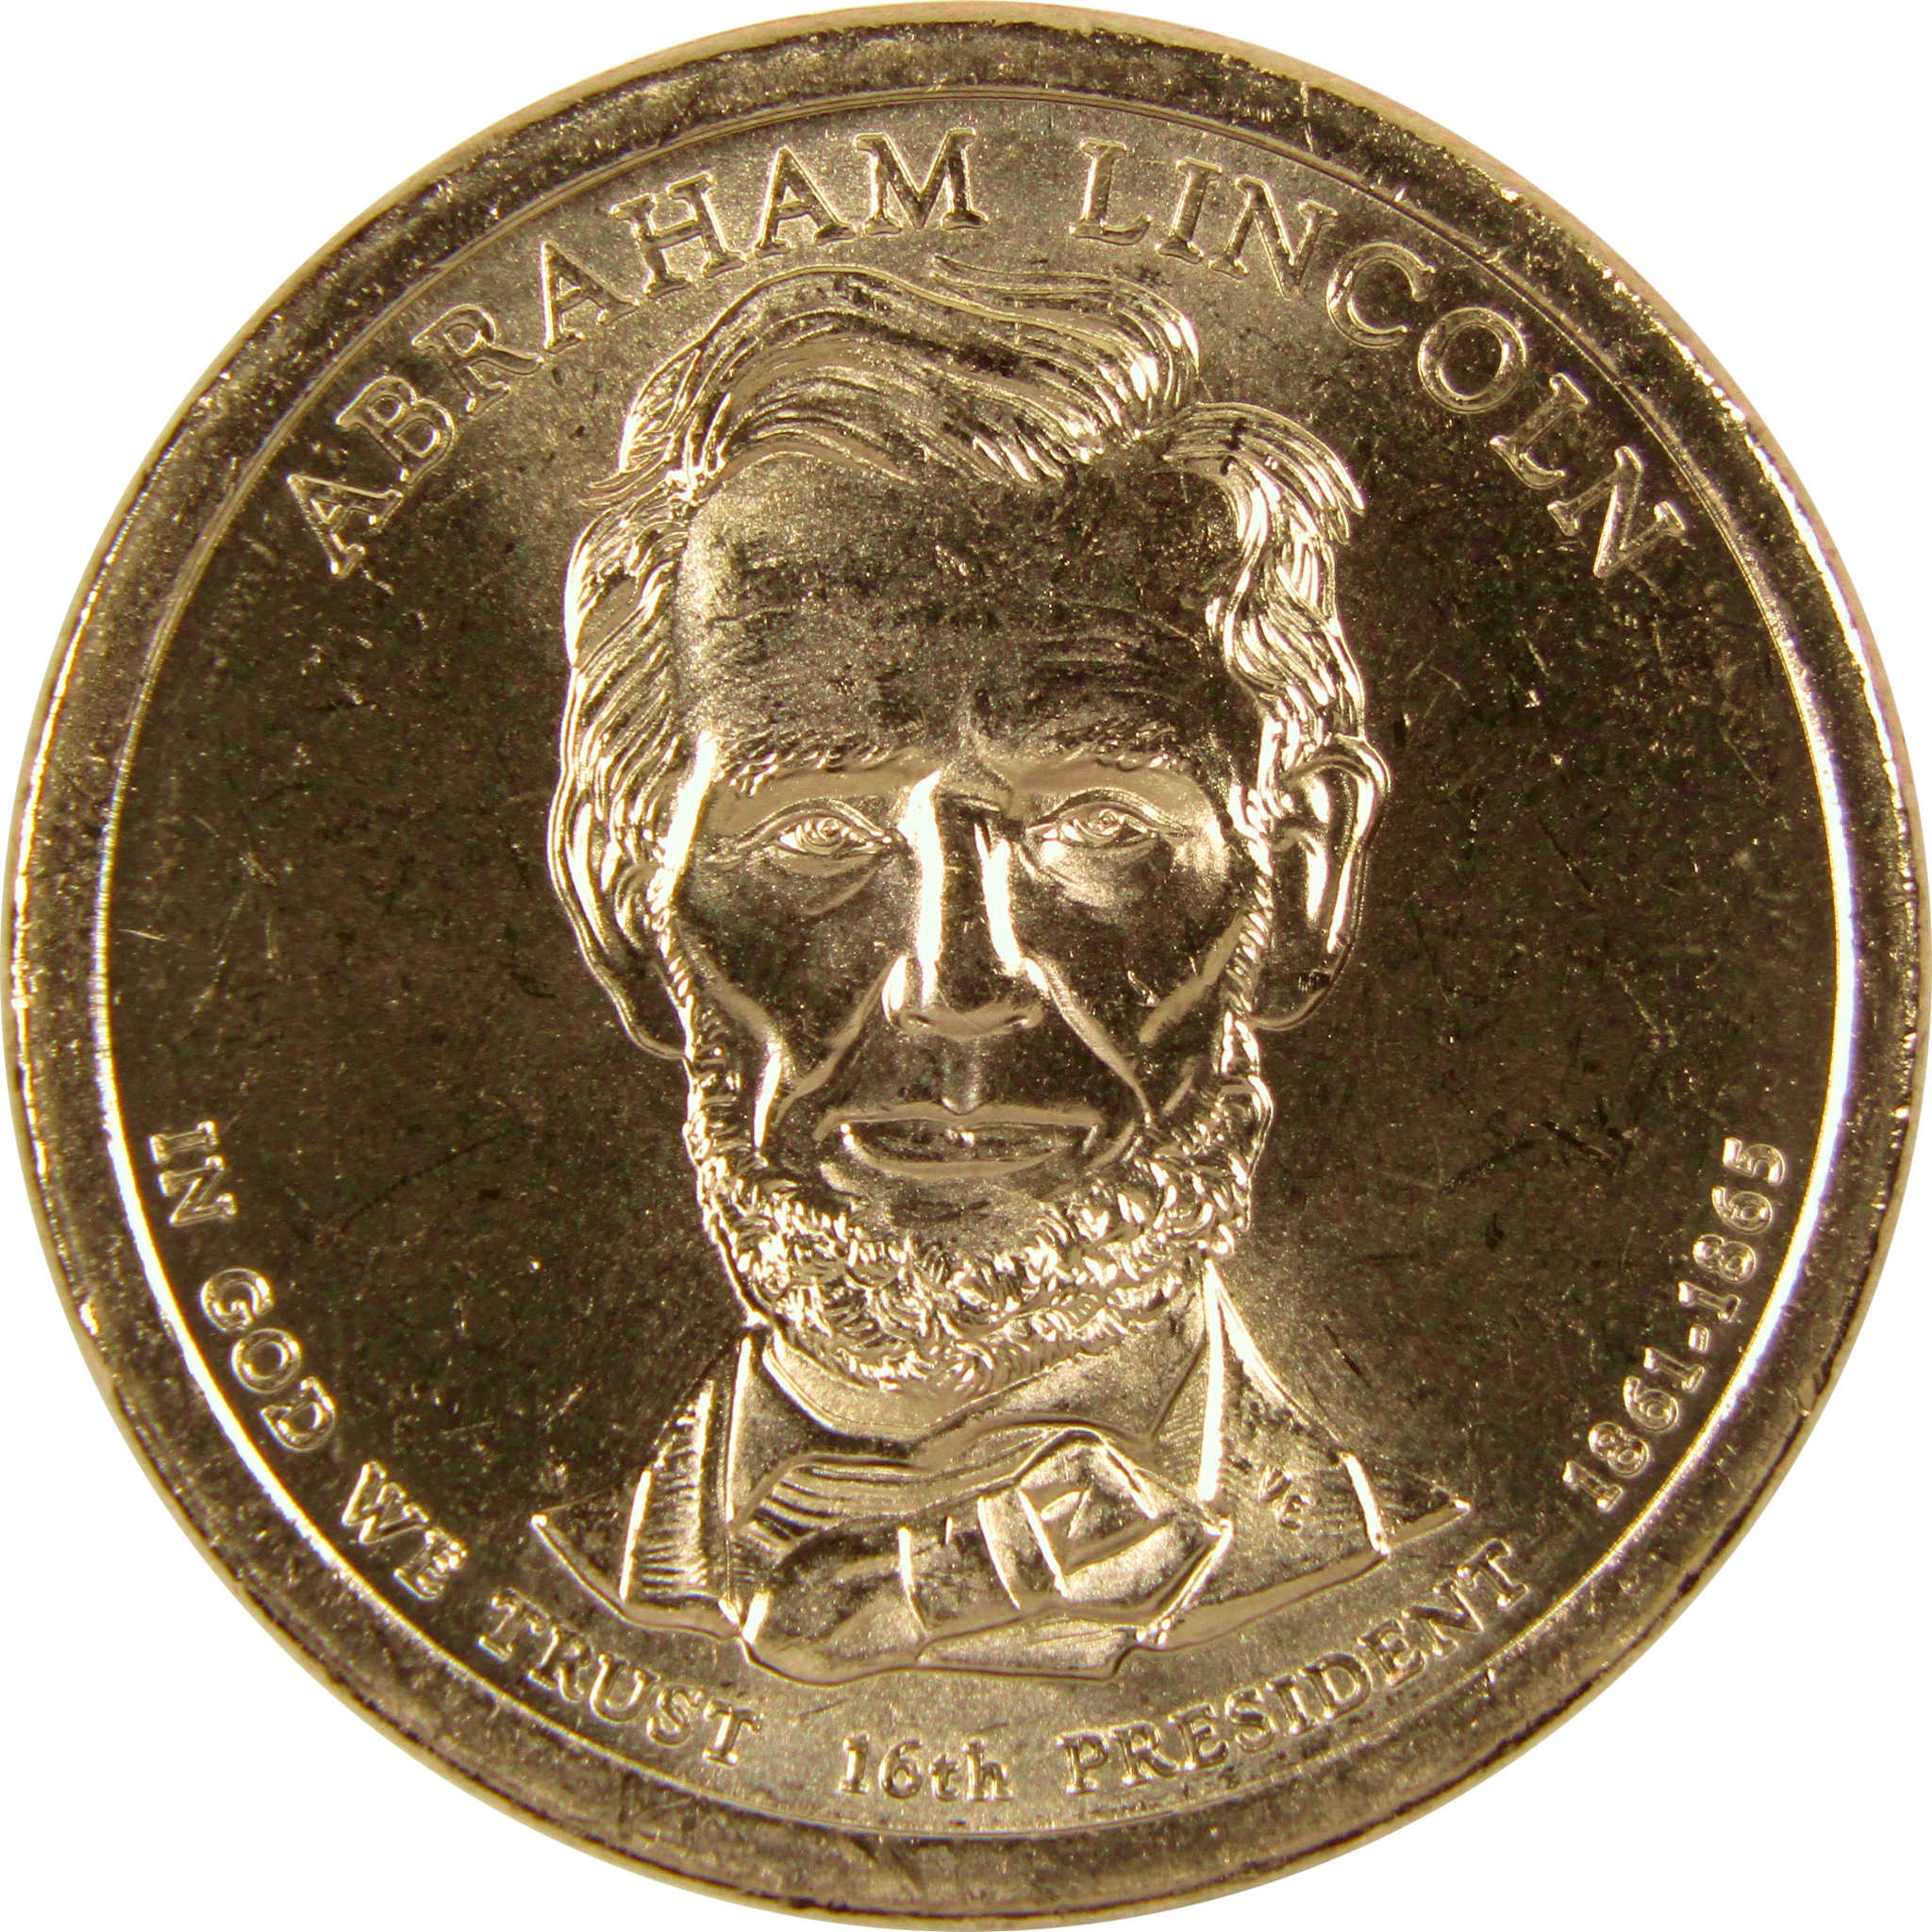 2010 P Abraham Lincoln Presidential Dollar BU Uncirculated $1 Coin